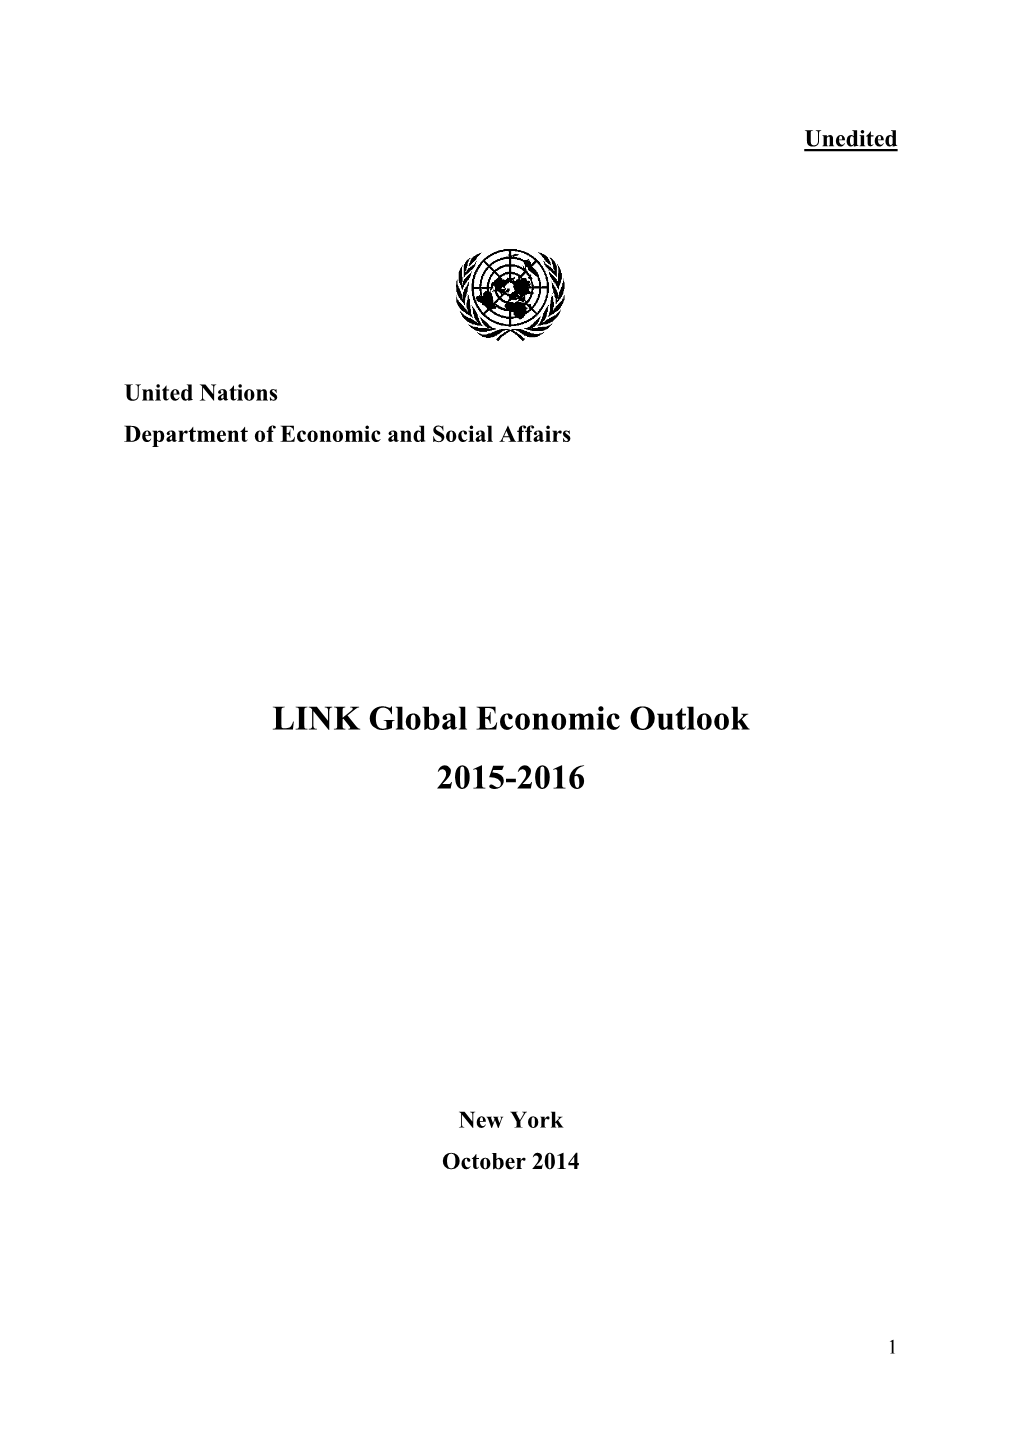 LINK Global Economic Outlook 2015-2016